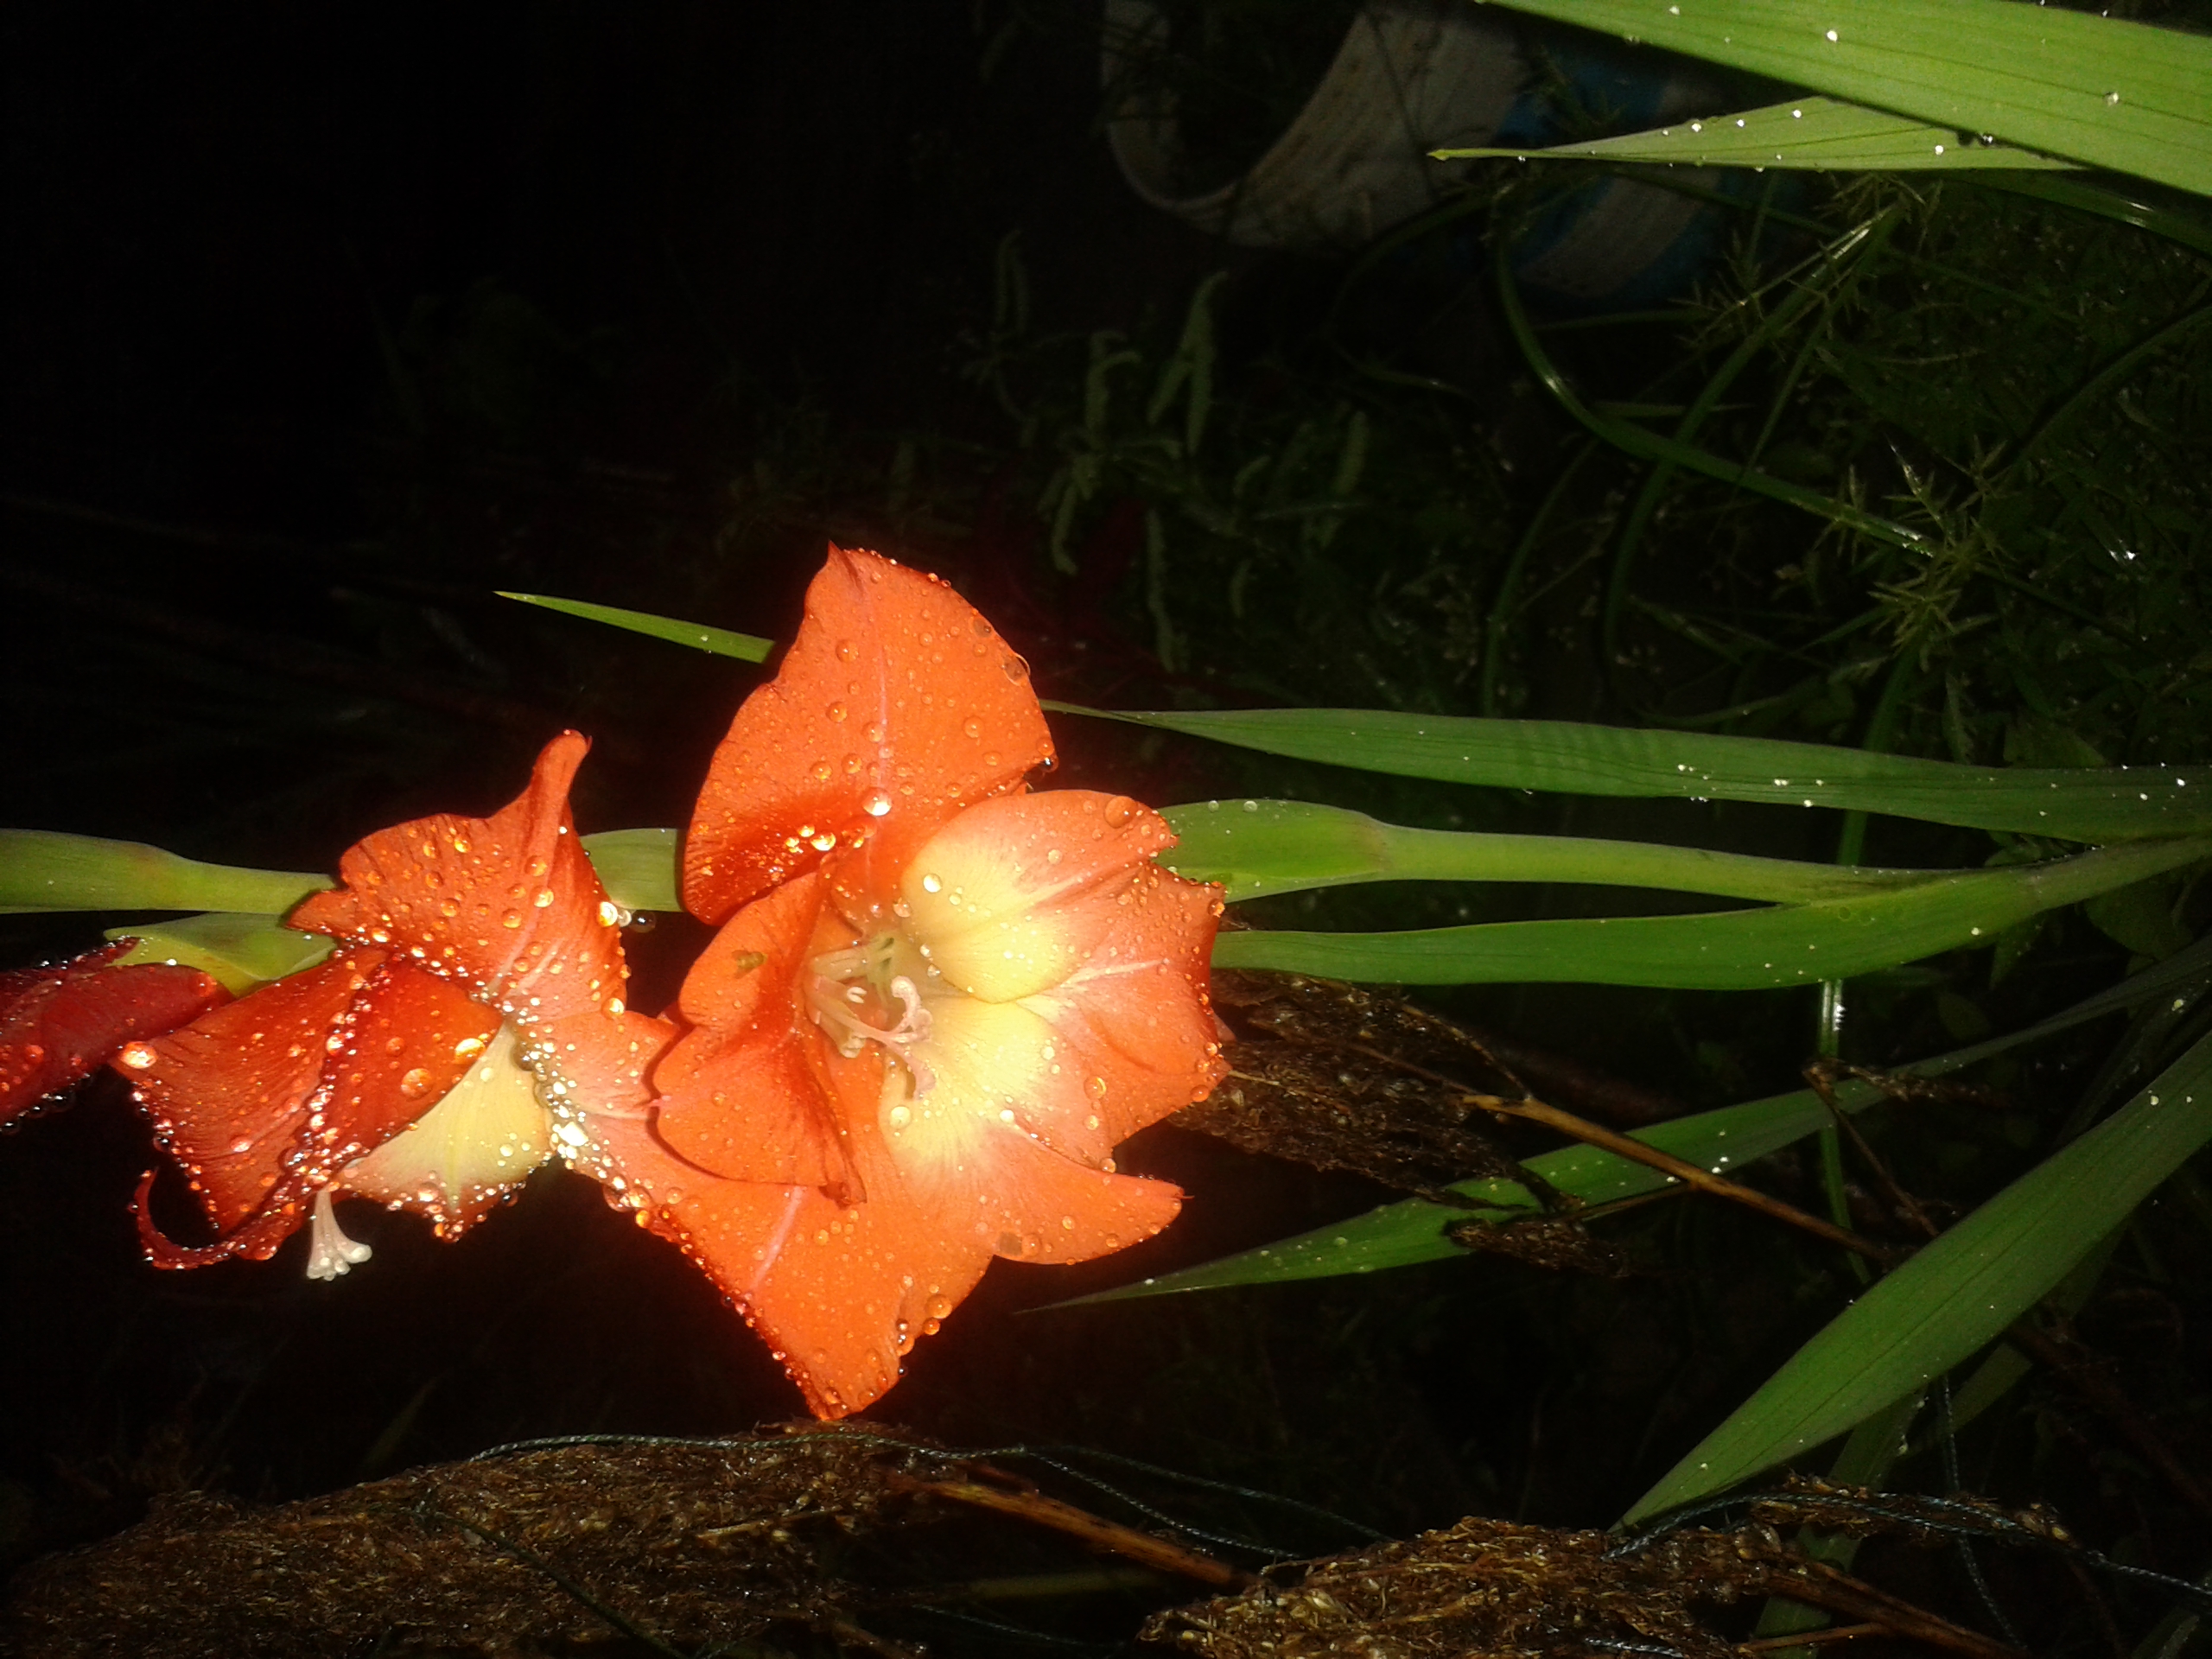 File:Blooming flowers of kerala.jpg - Wikimedia Commons